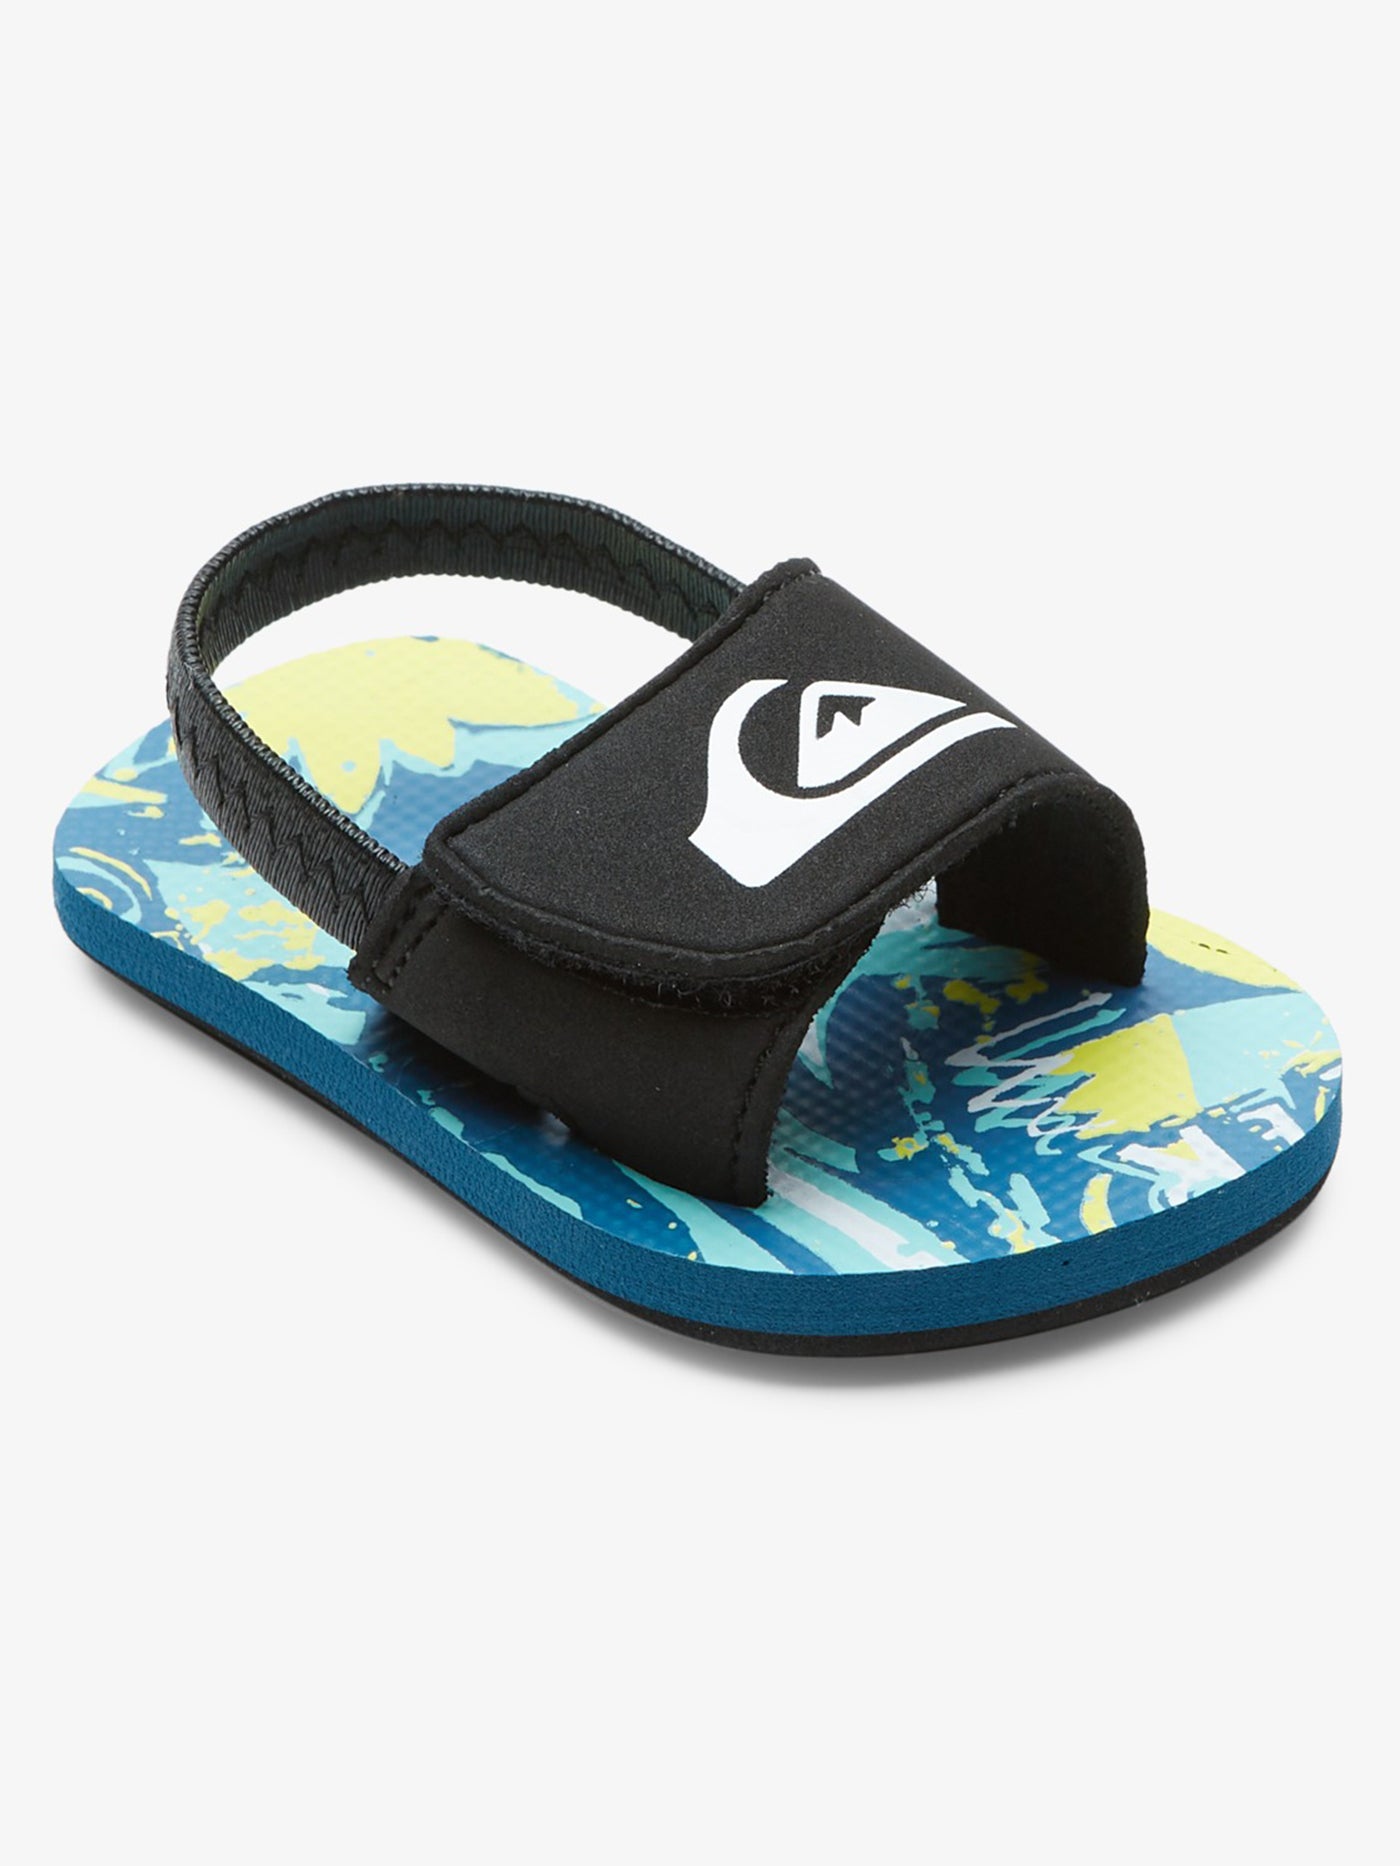 Quiksilver Spring 2023 Molokai Layback Blue/Yellow Sandals